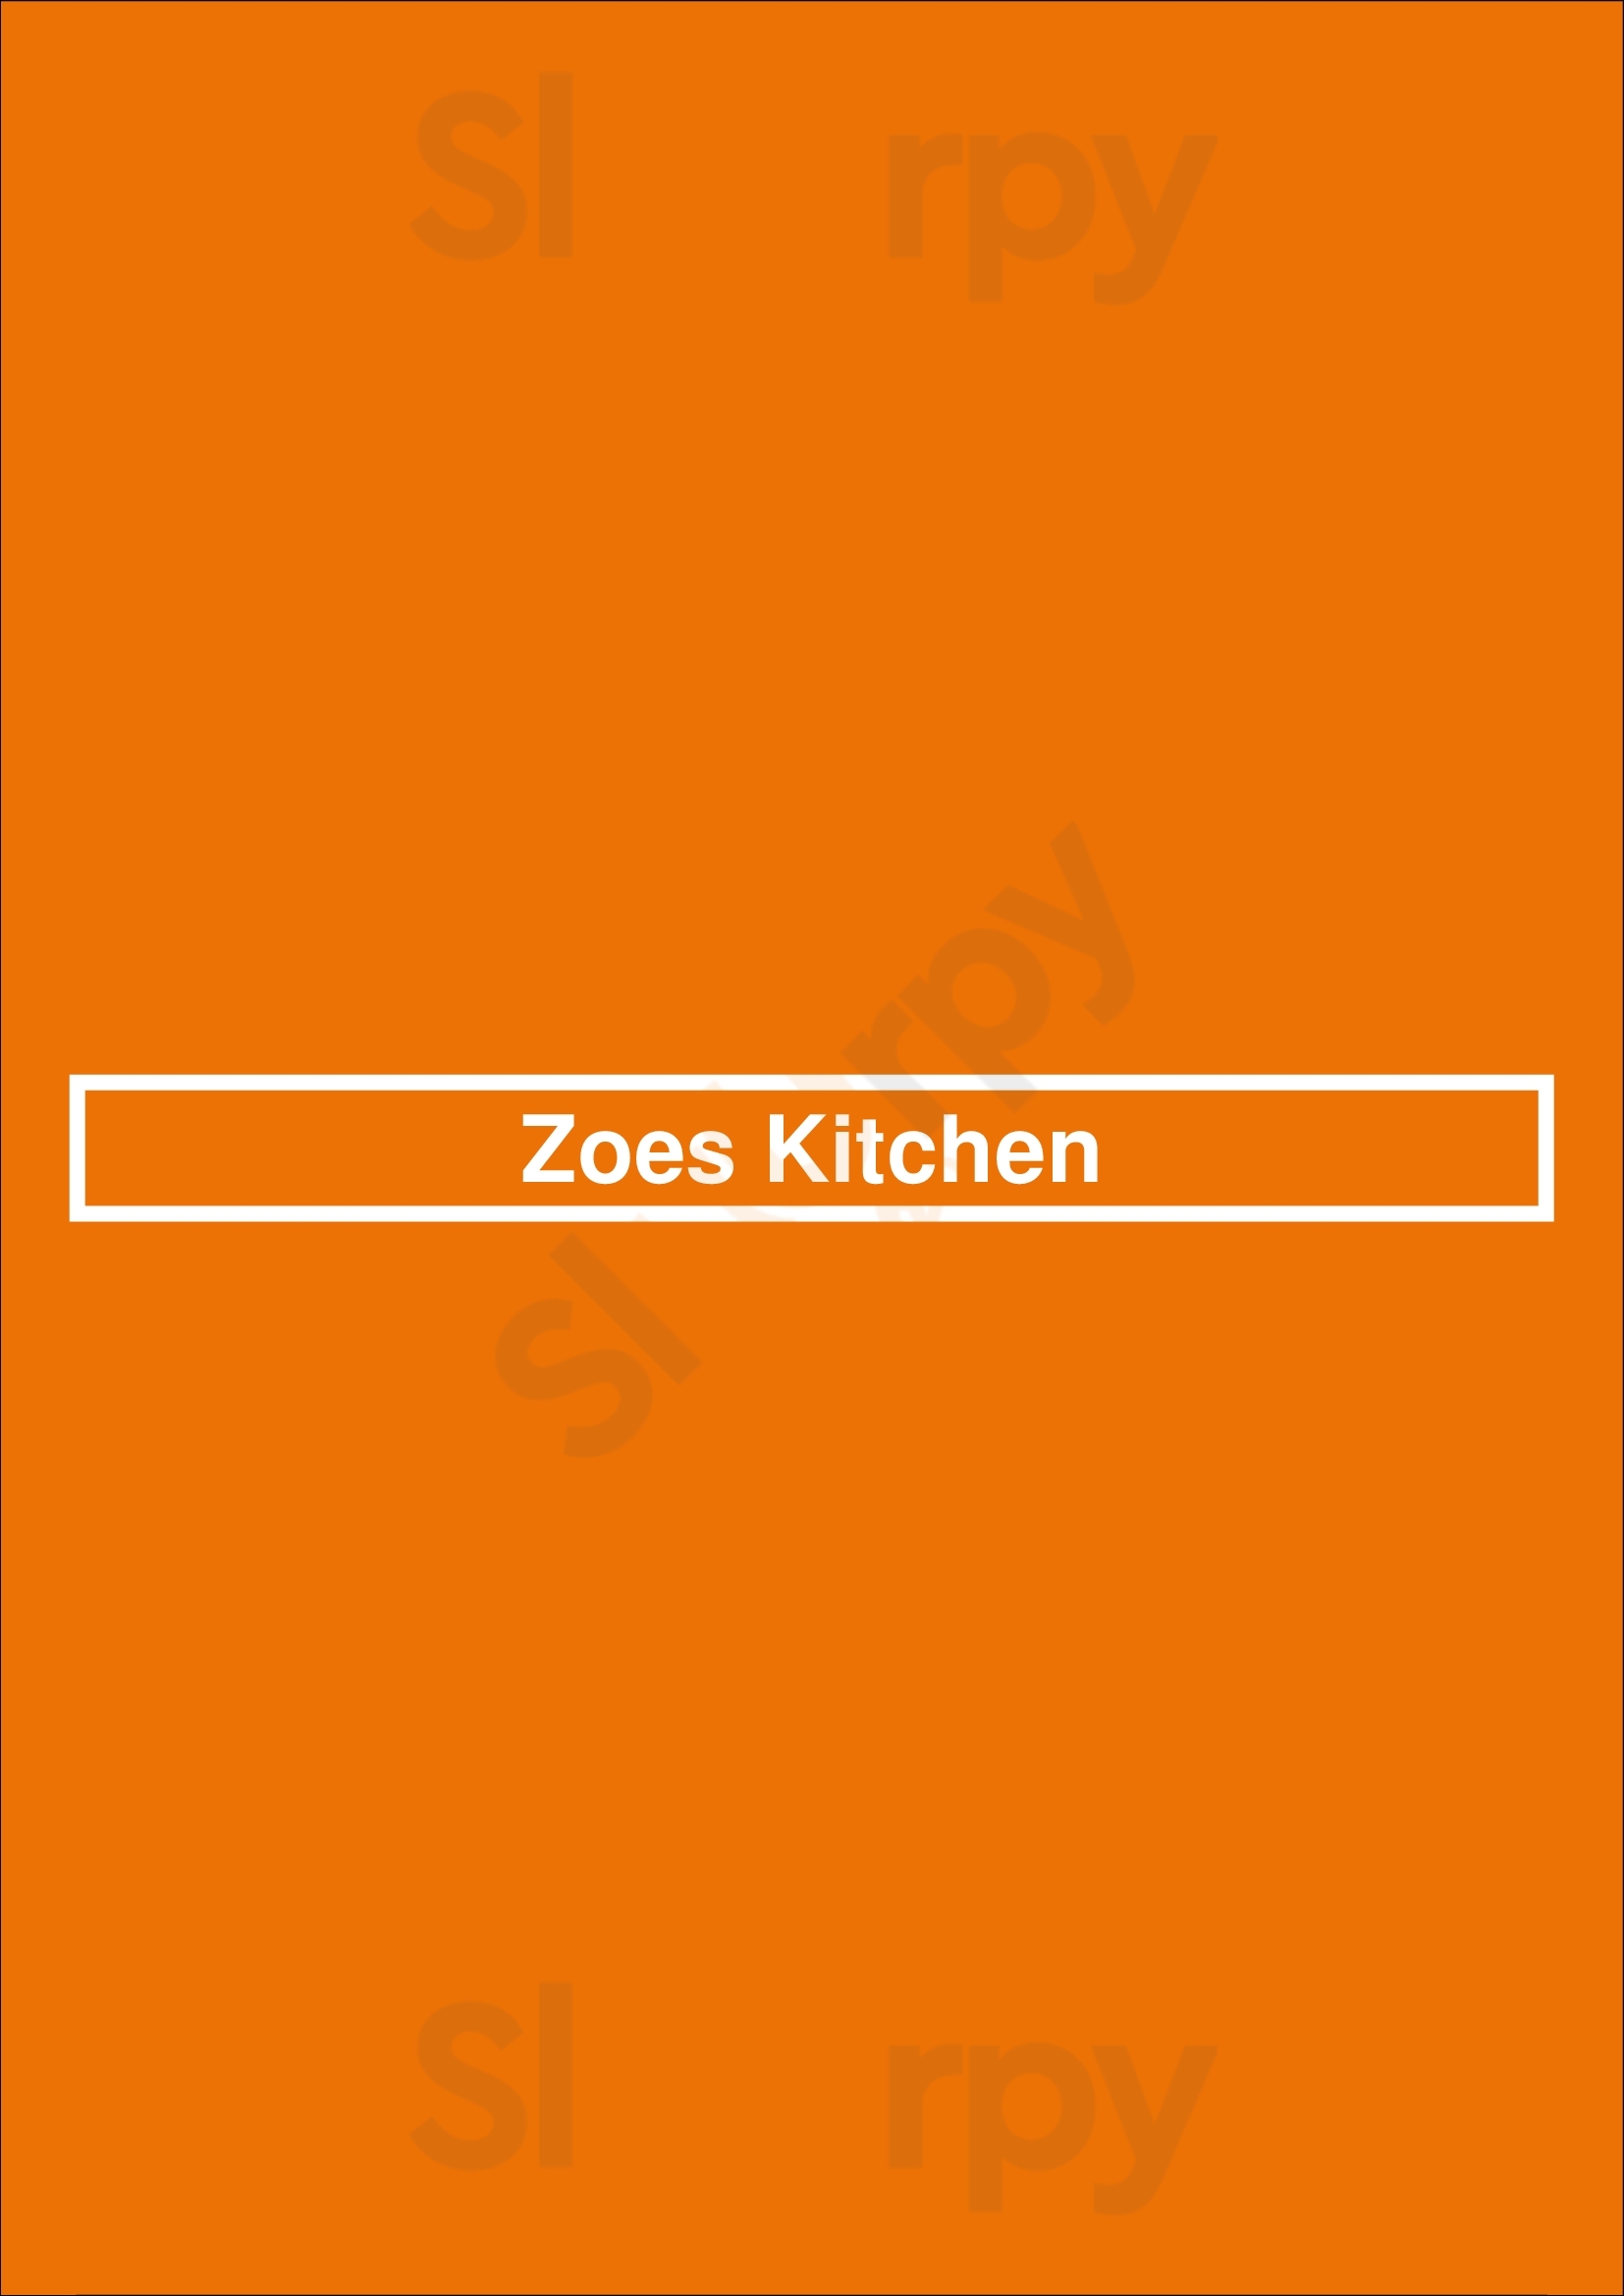 Zoes Kitchen Charlotte Menu - 1